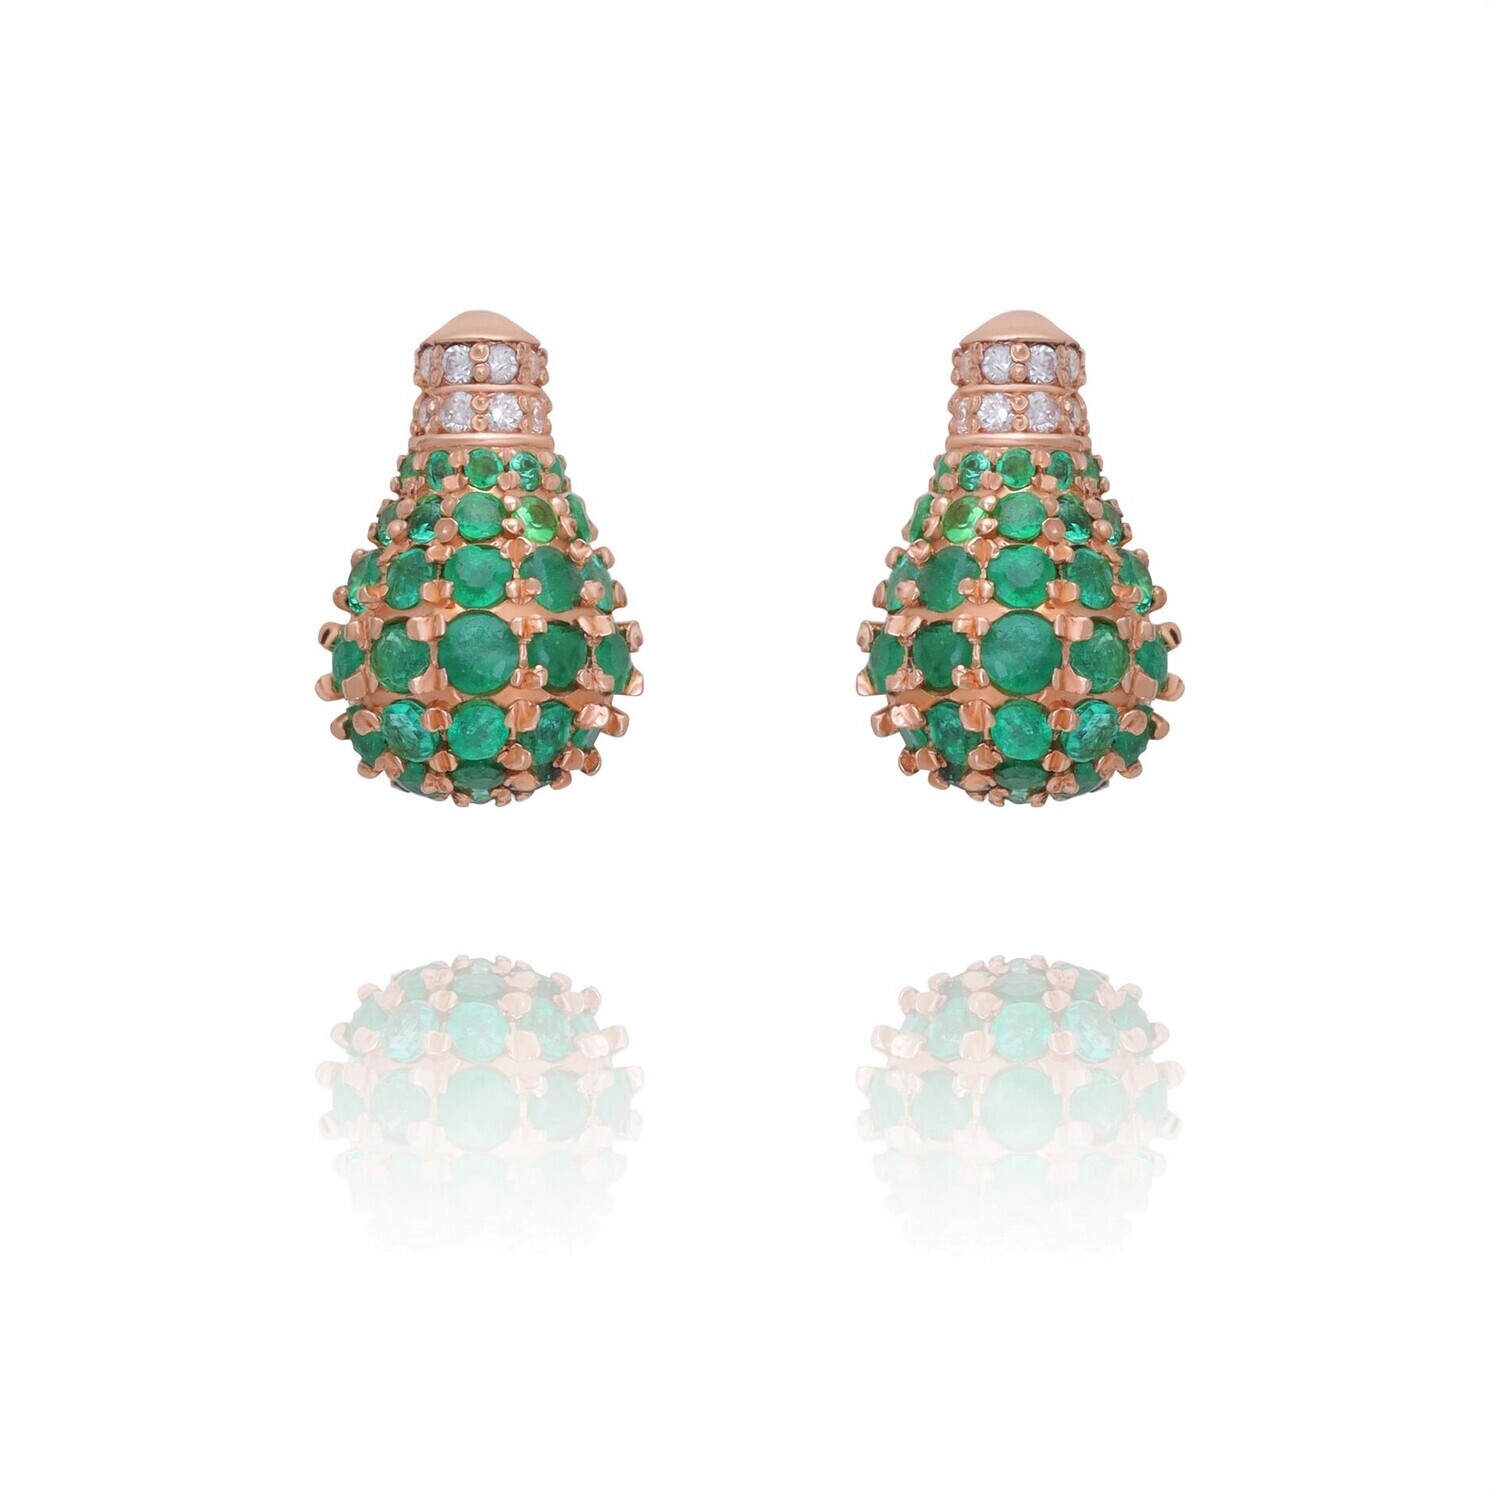 Light Diamond Earrings with Emerald